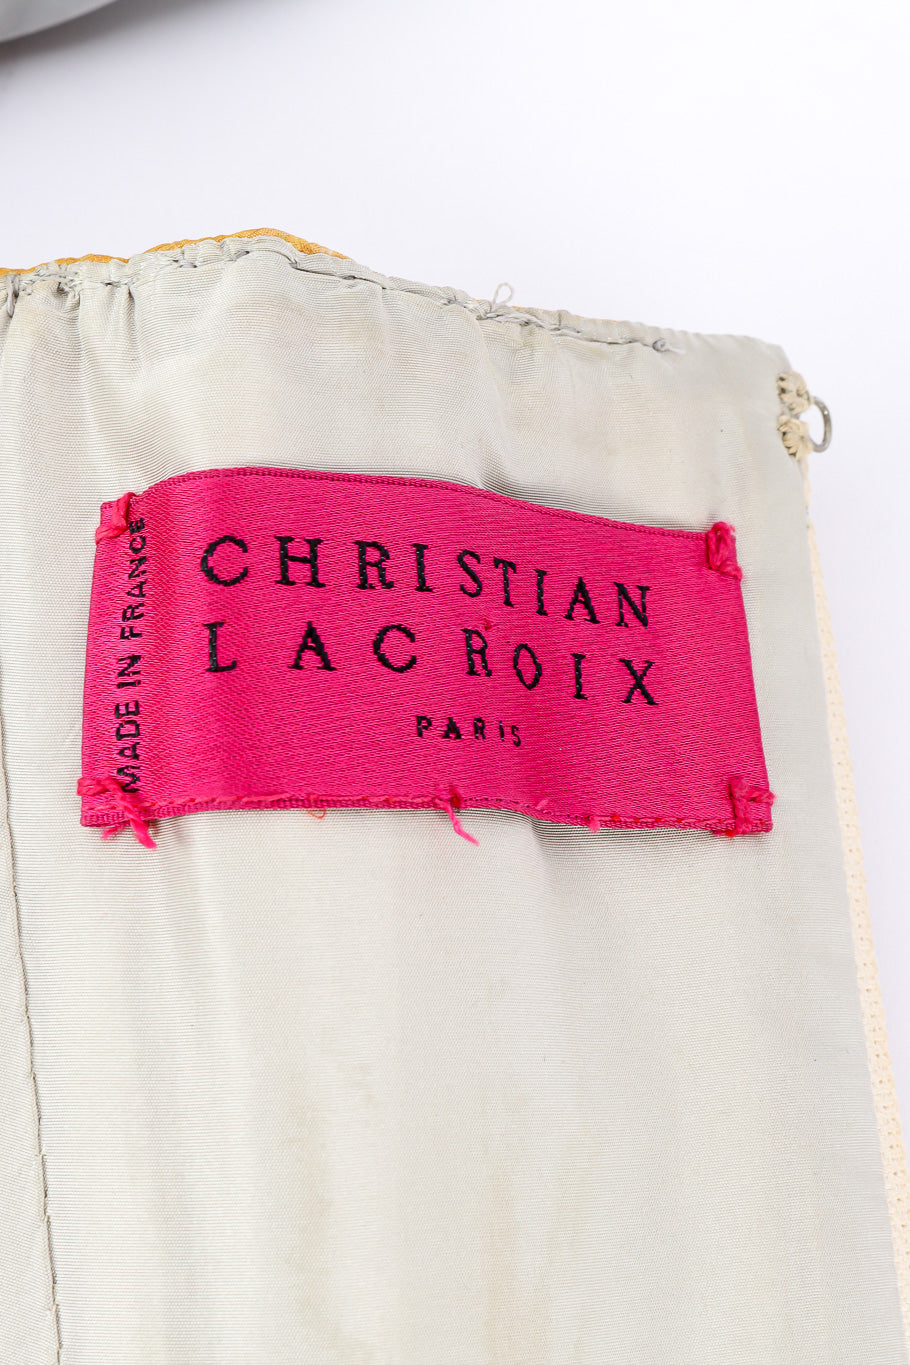 Corset, skirt, and shawl set by Christian La Croix label @recessla